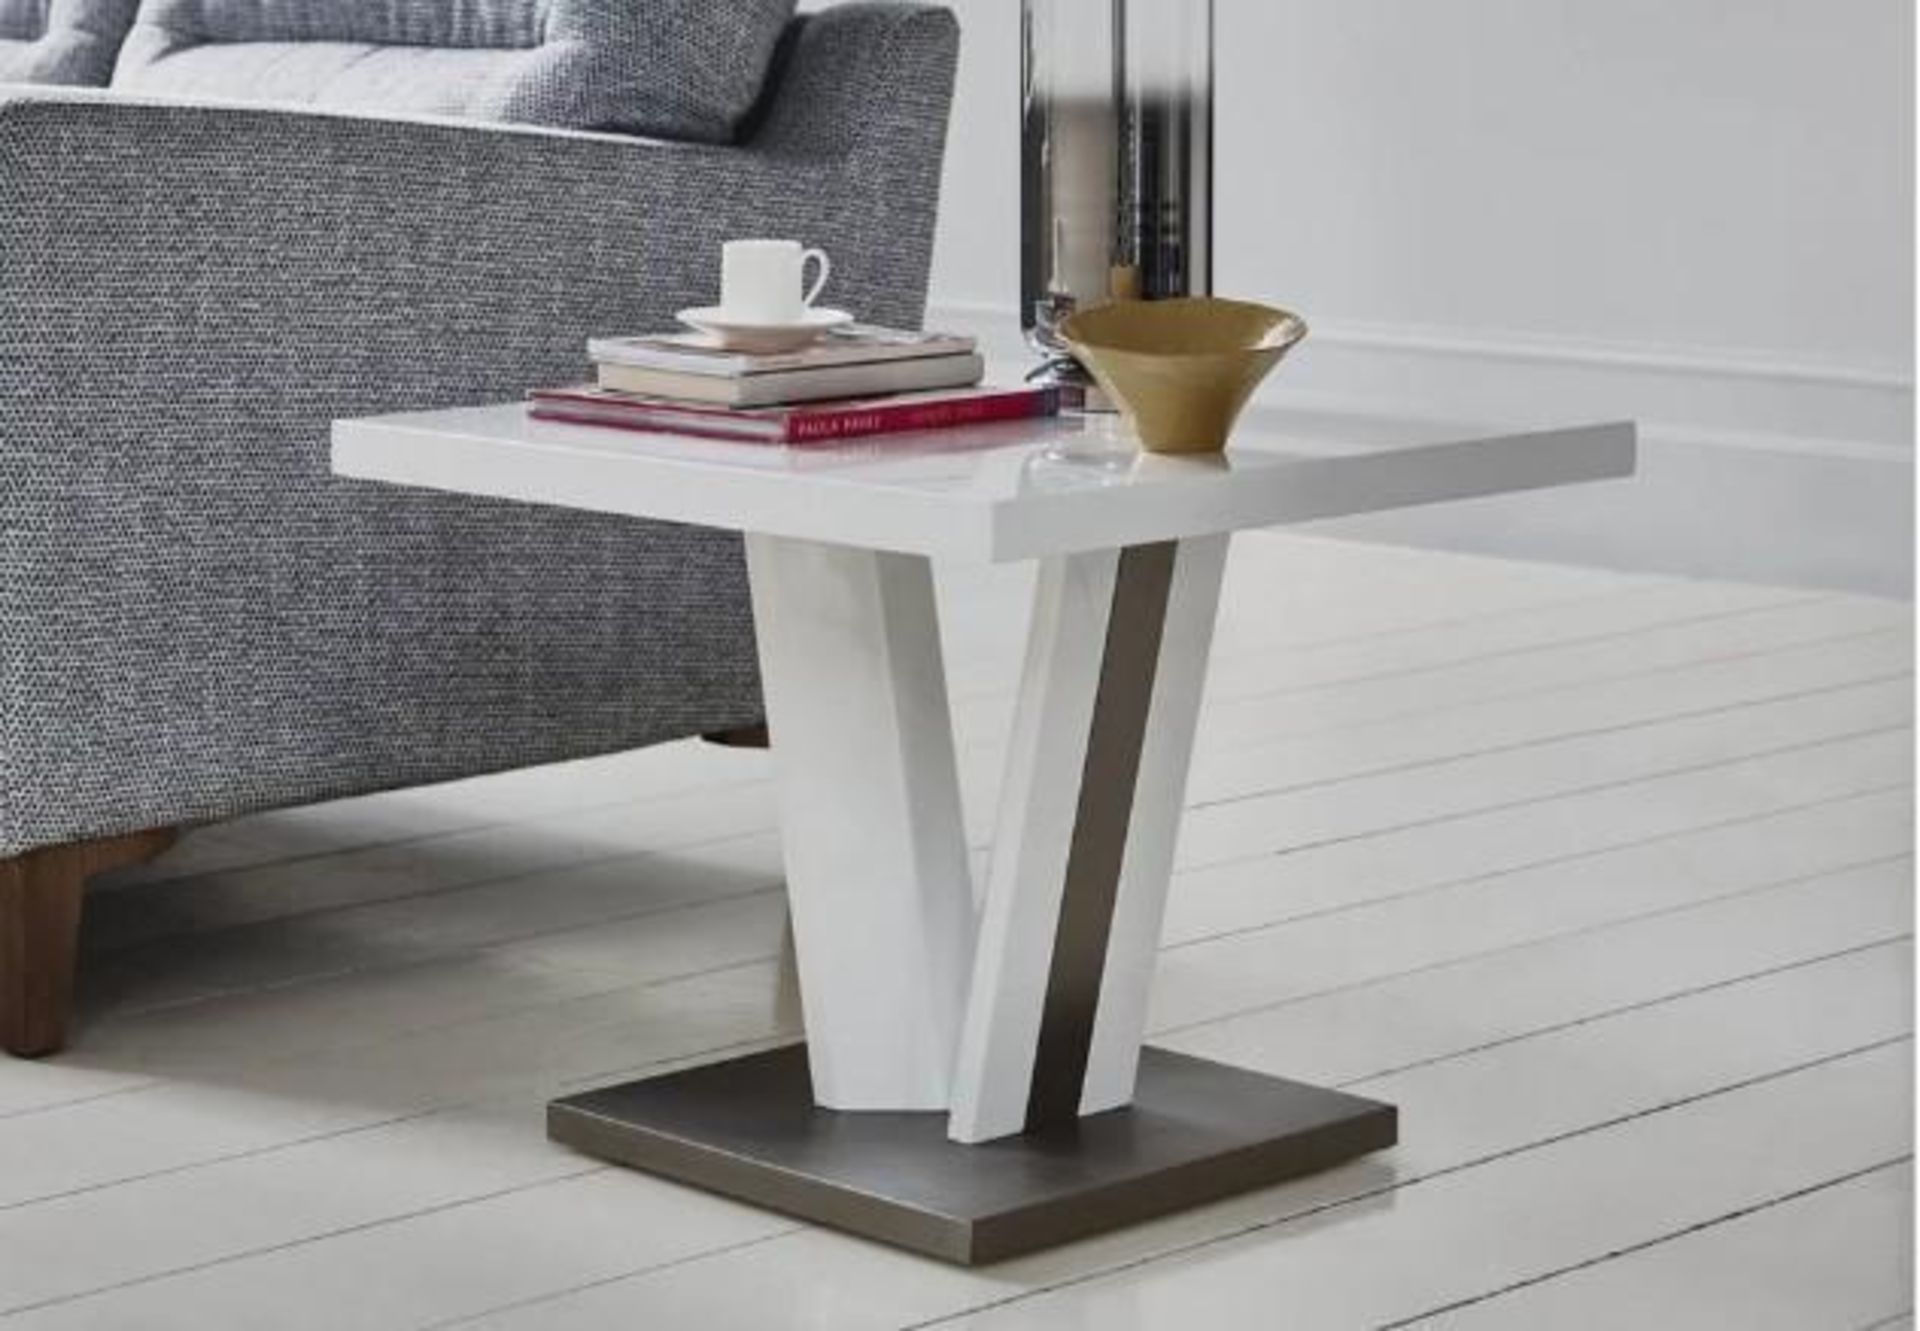 * EX DISPLAY* Furniture Village Bianco white lamp table. RRP: £299.00